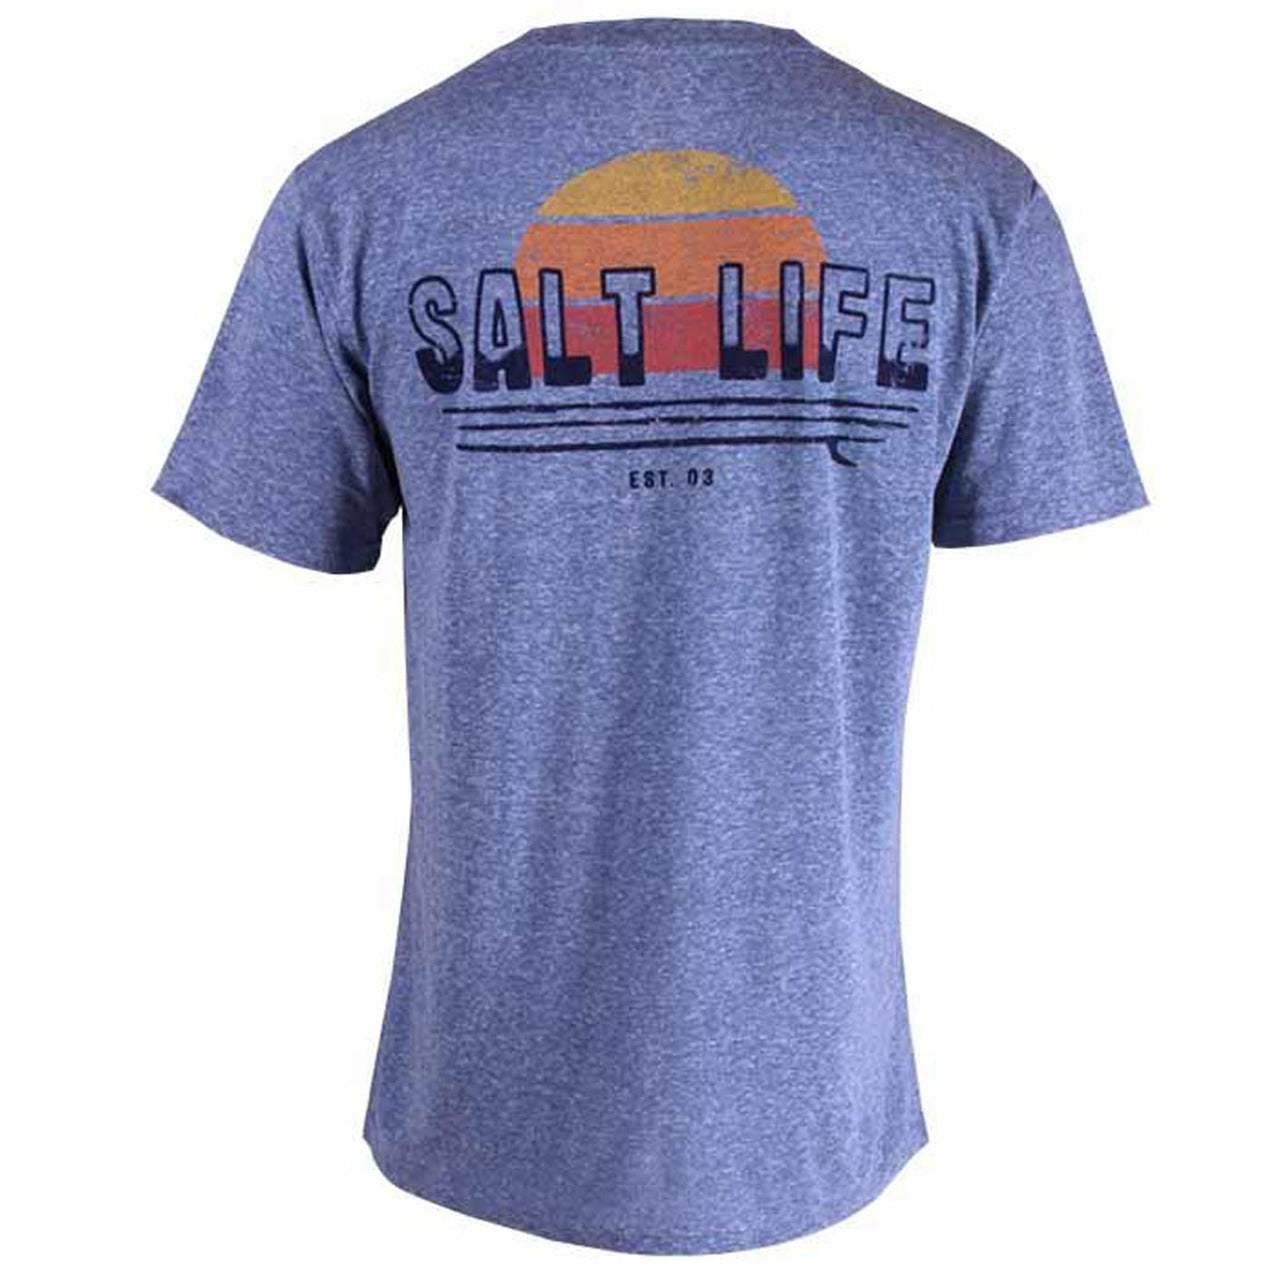 Salt Life Men's Sunset Board Short Sleeve Tri-blend T-Shirt